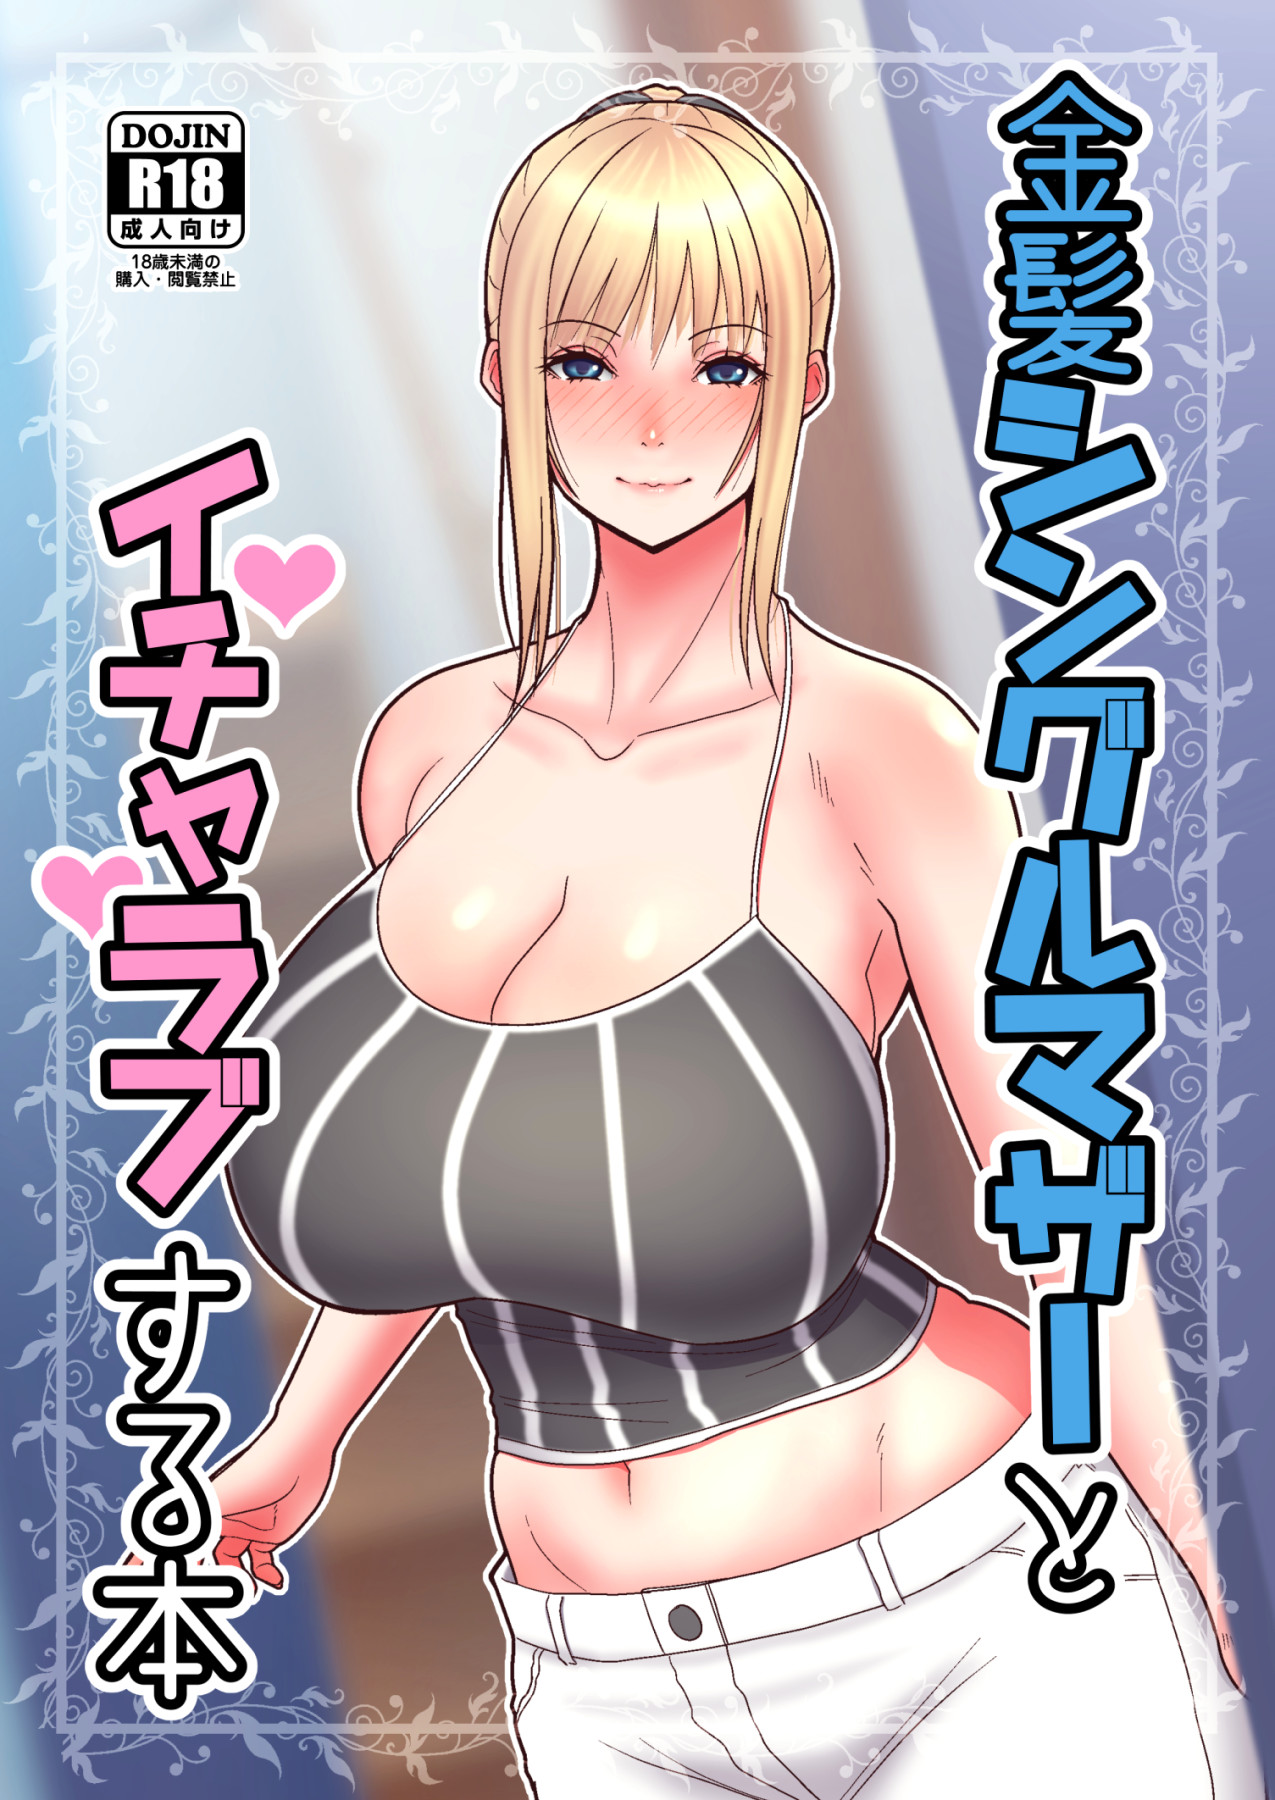 Hentai Manga Comic-Sweet Love With A Blonde, Single Mother-Read-1